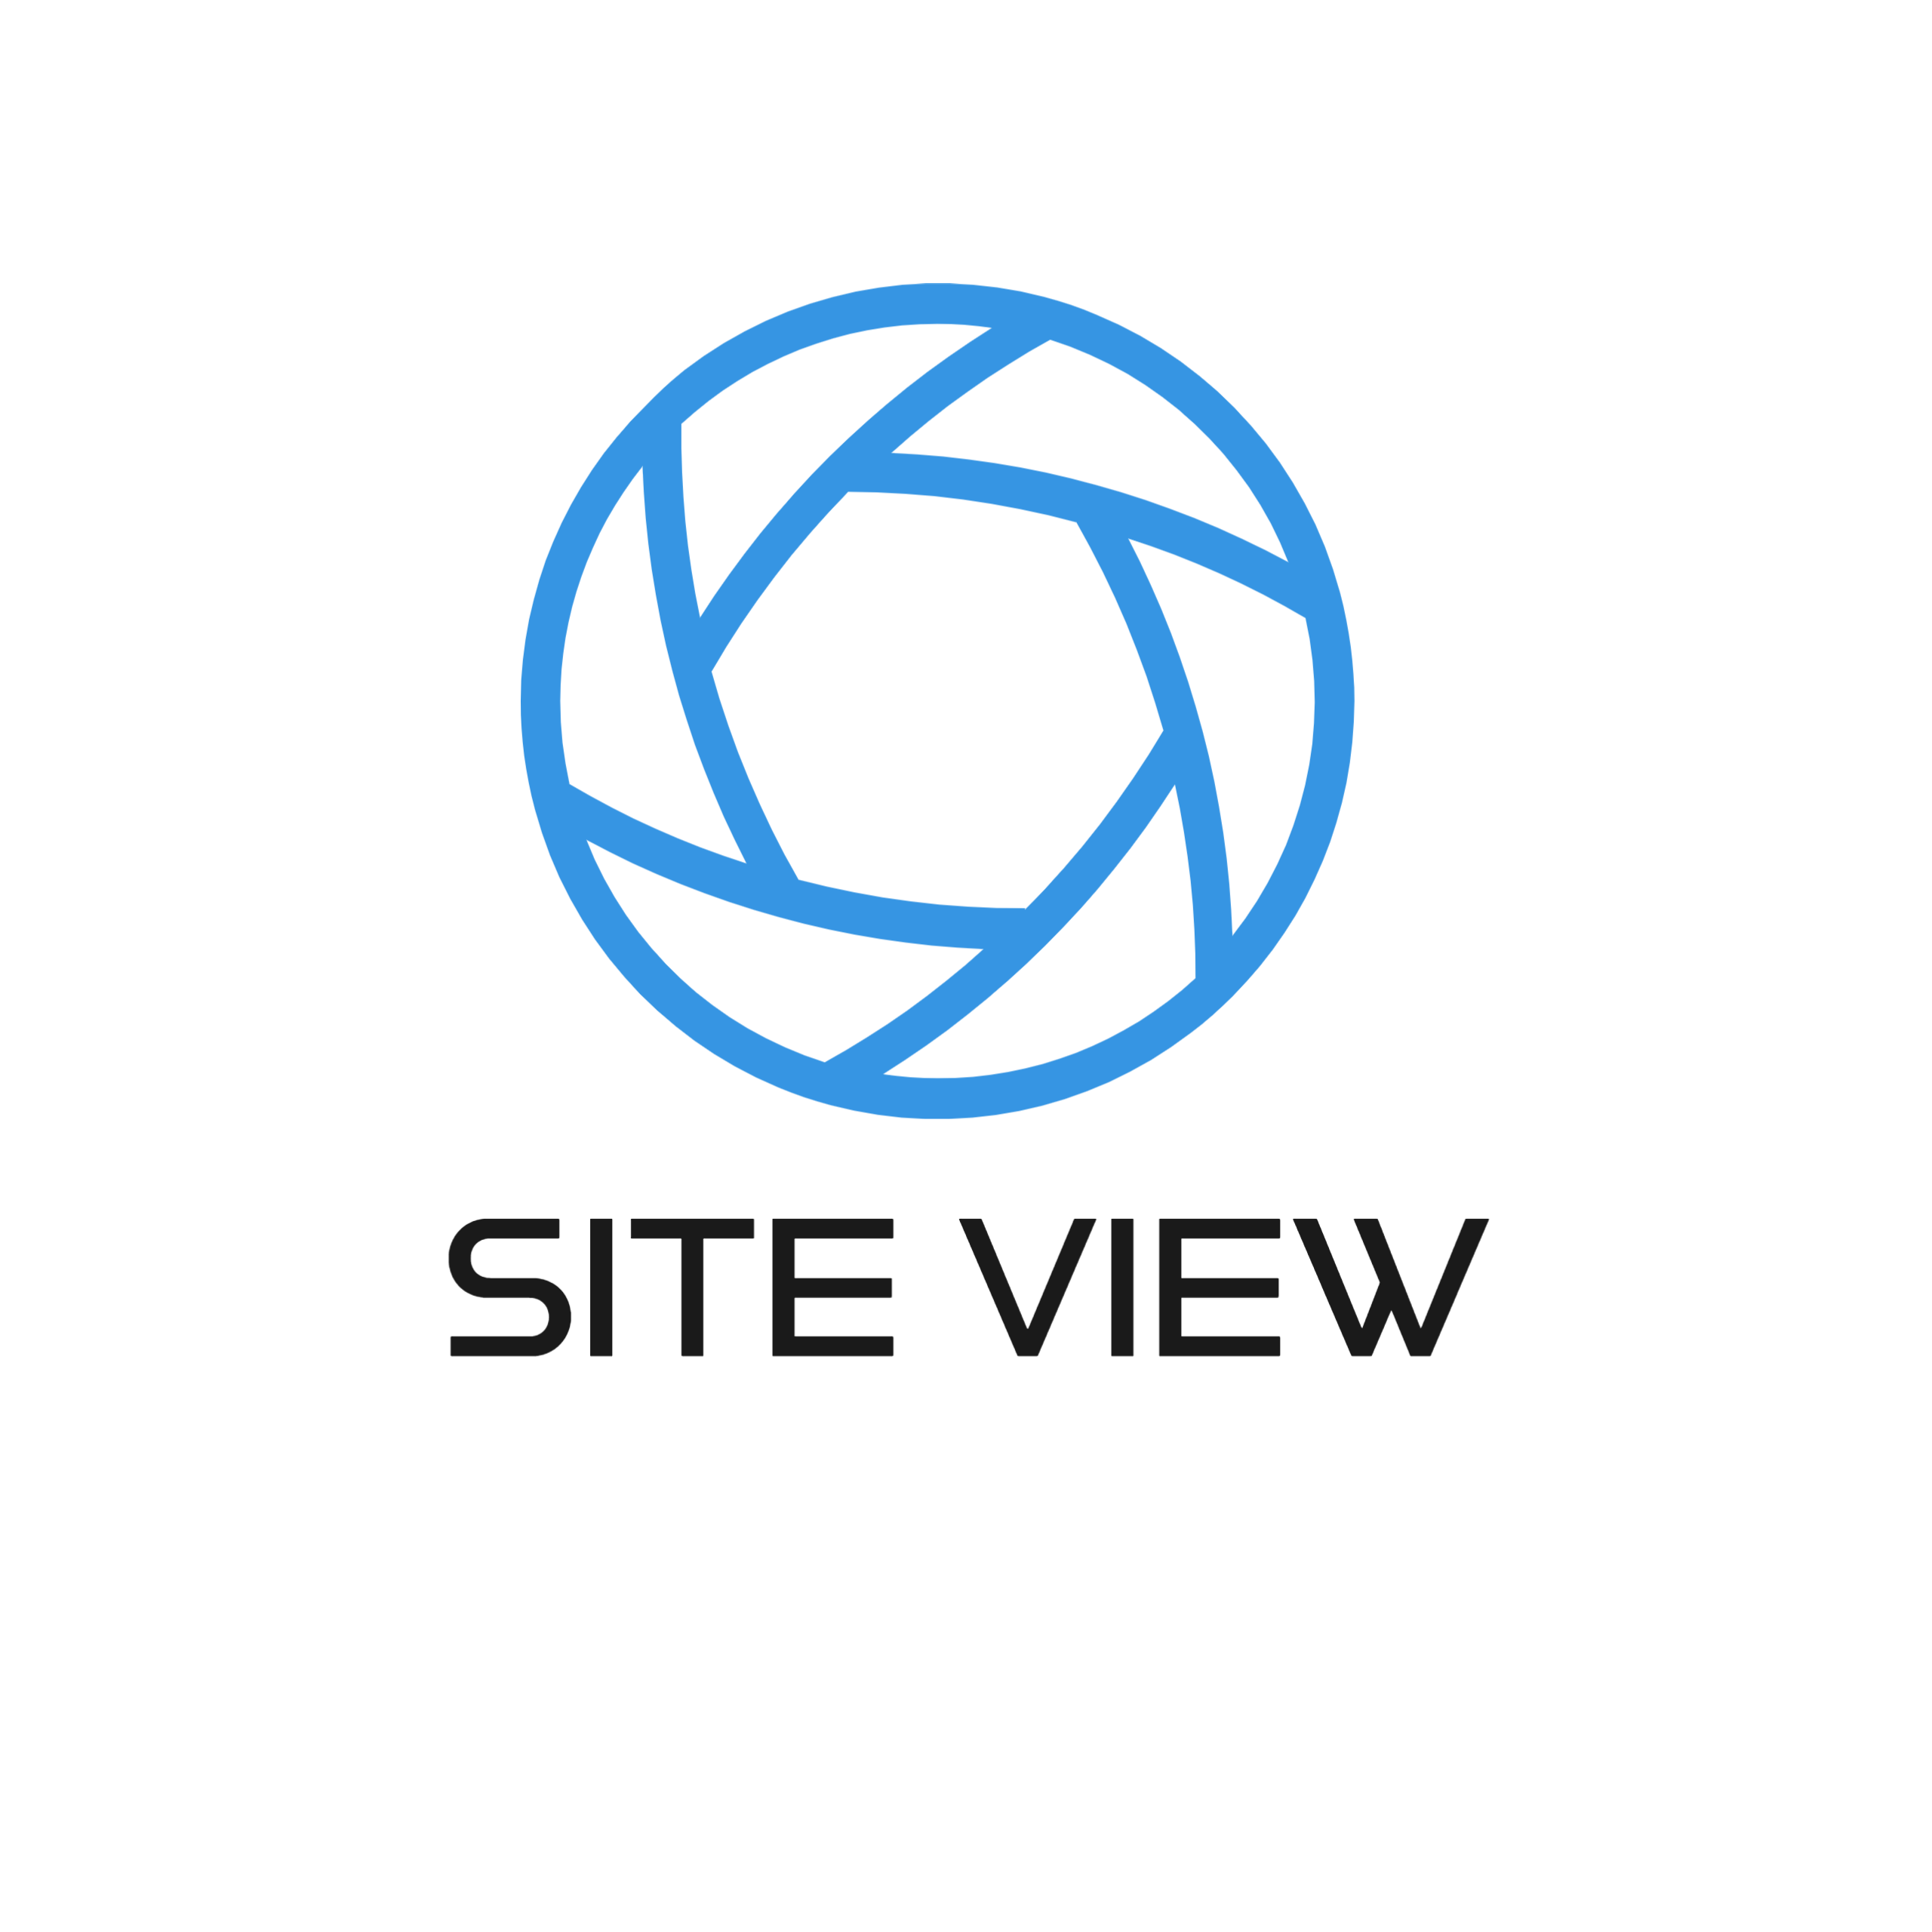 site view logo transparent background